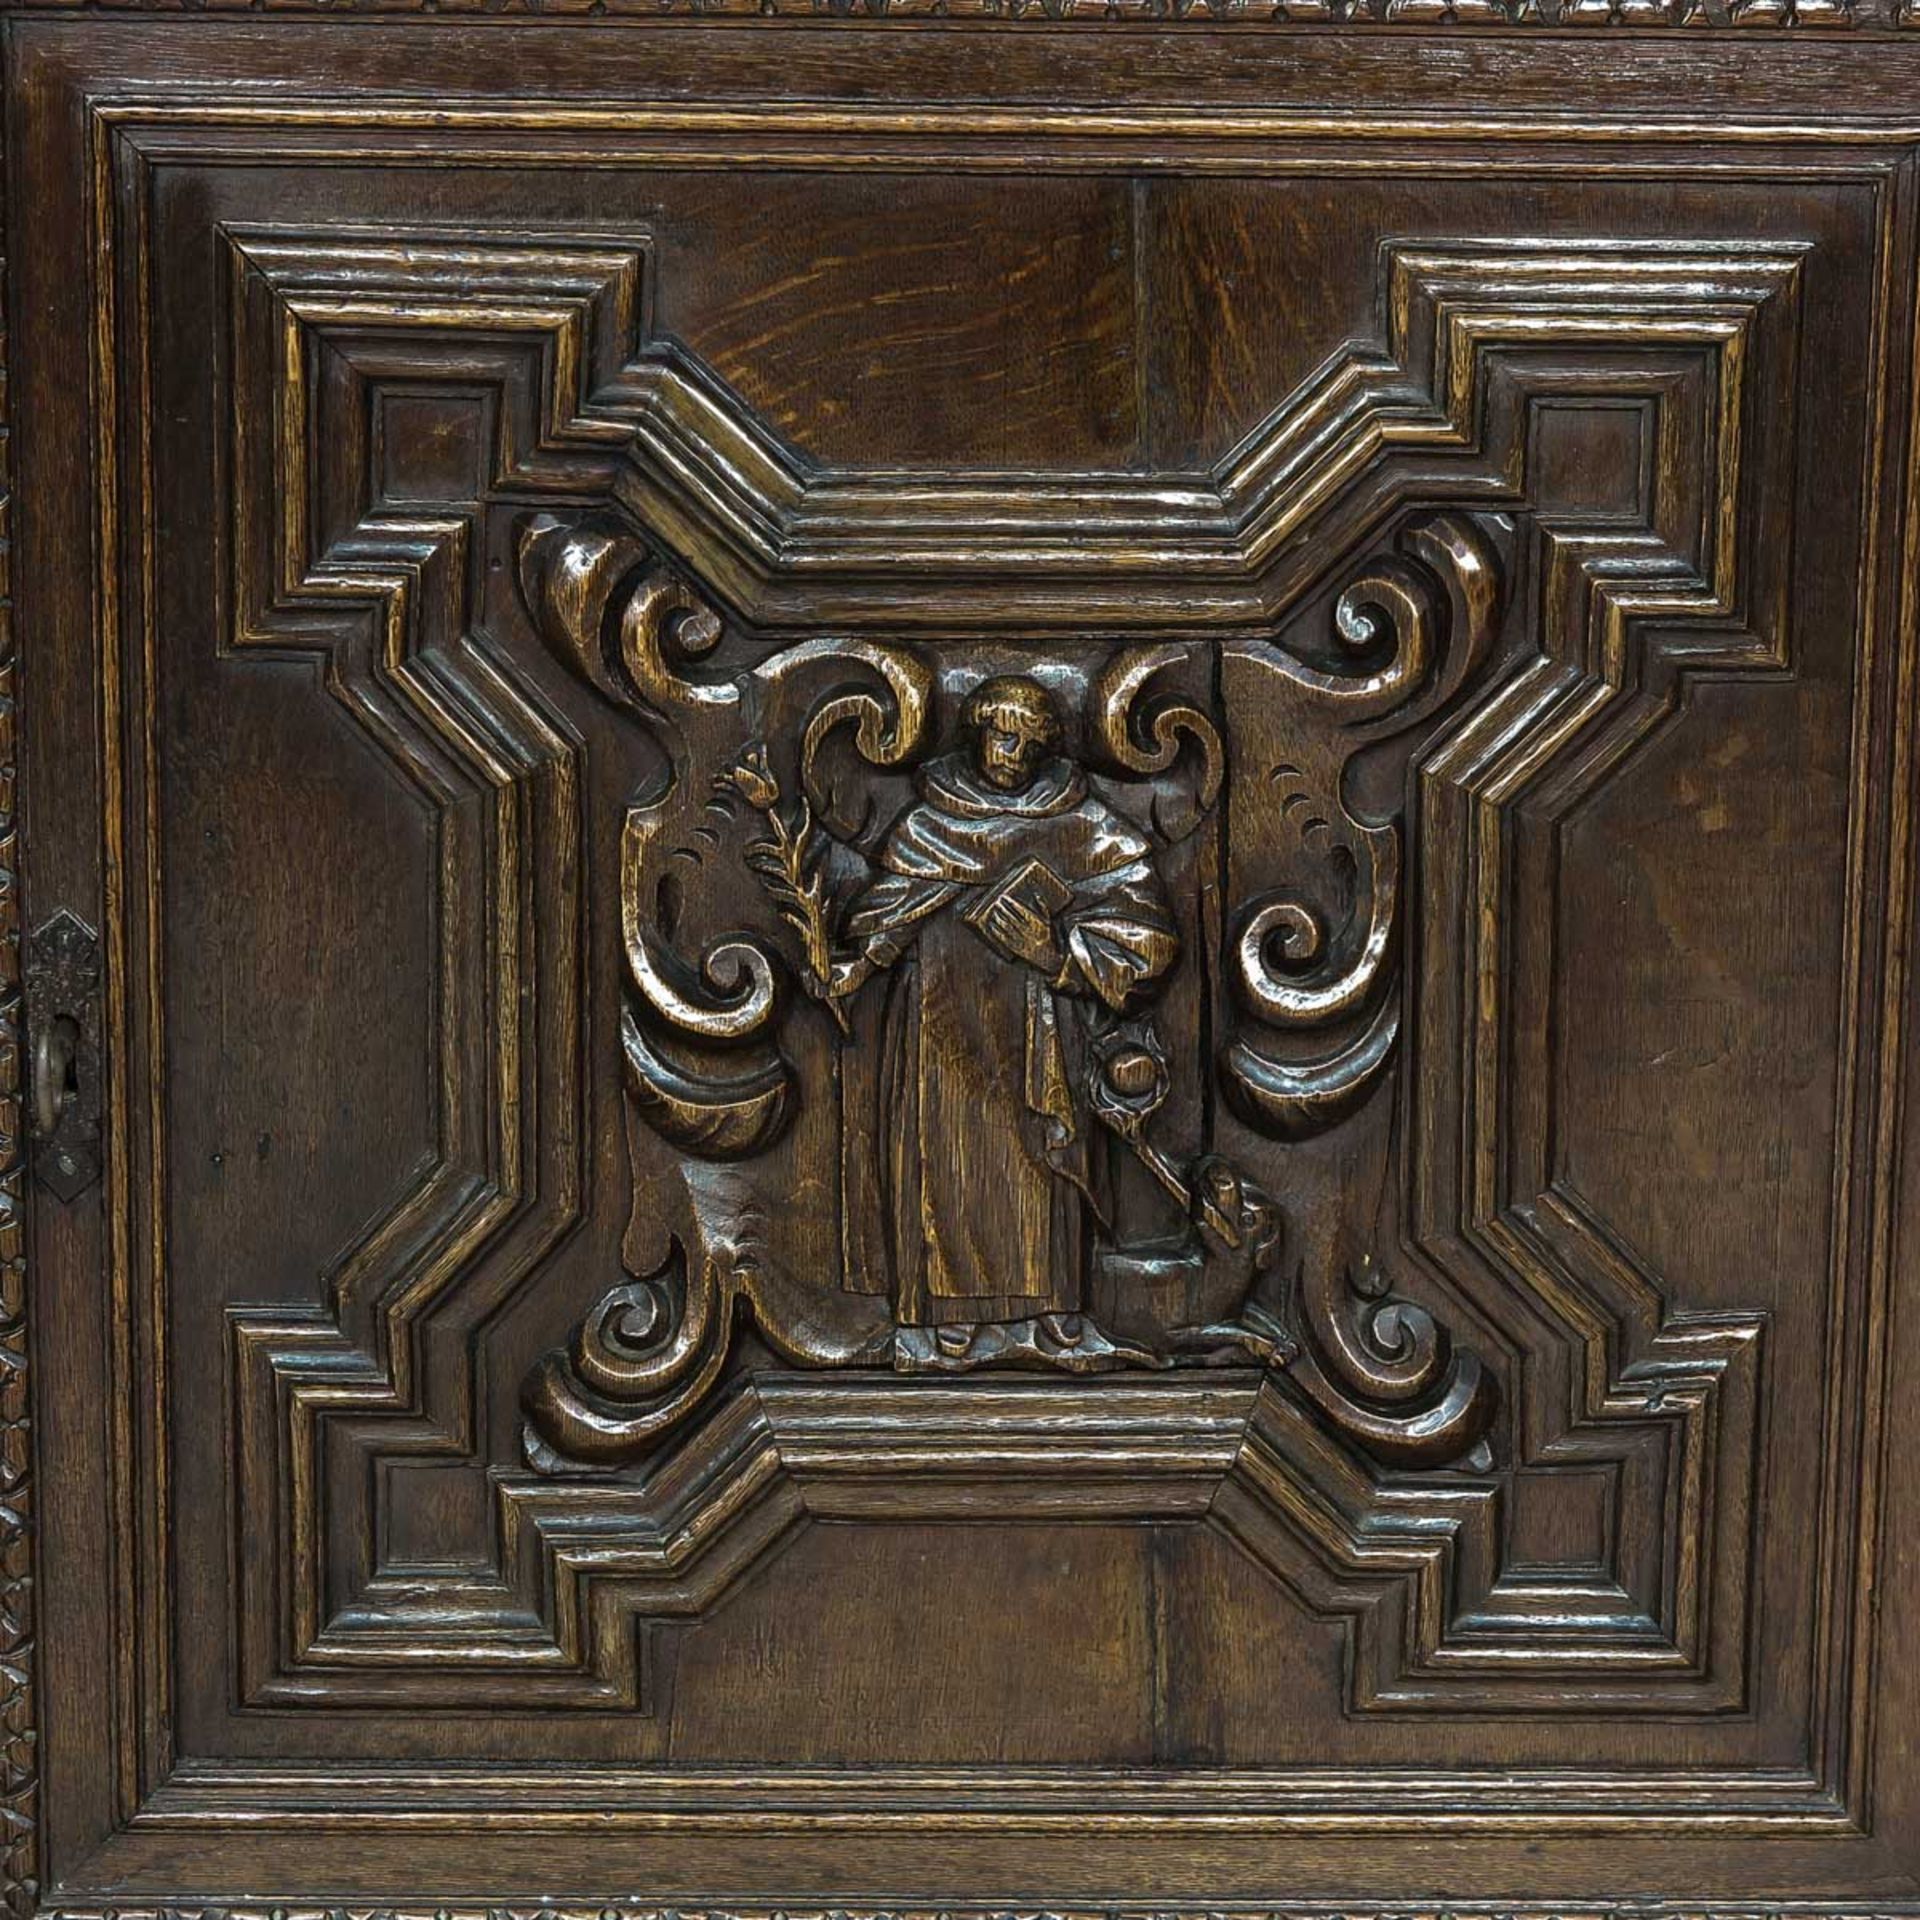 A Brugge Belgium Carved Cabinet Circa 1660 - 1680 - Image 9 of 10